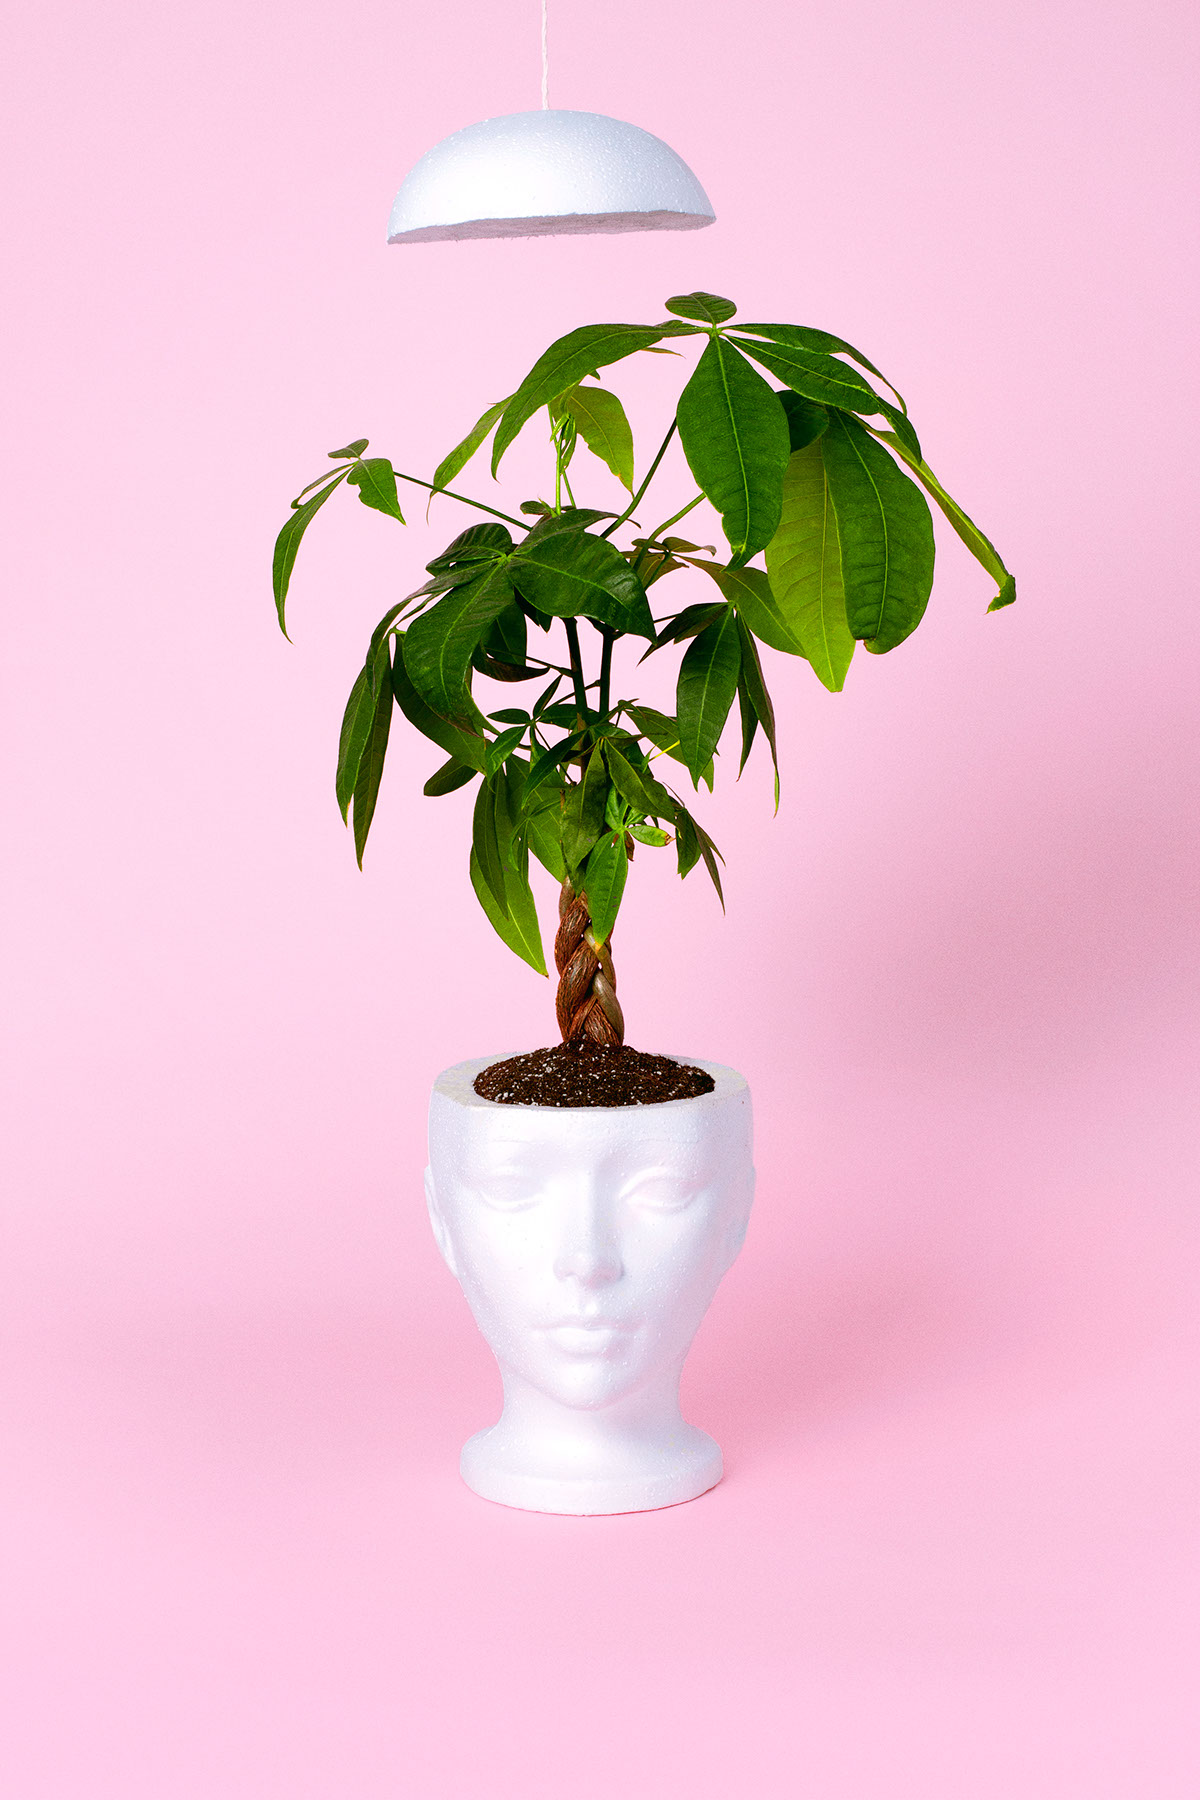 Plant 1F pink head tête humains green vert rose Events creative creatif evenement ideas idées